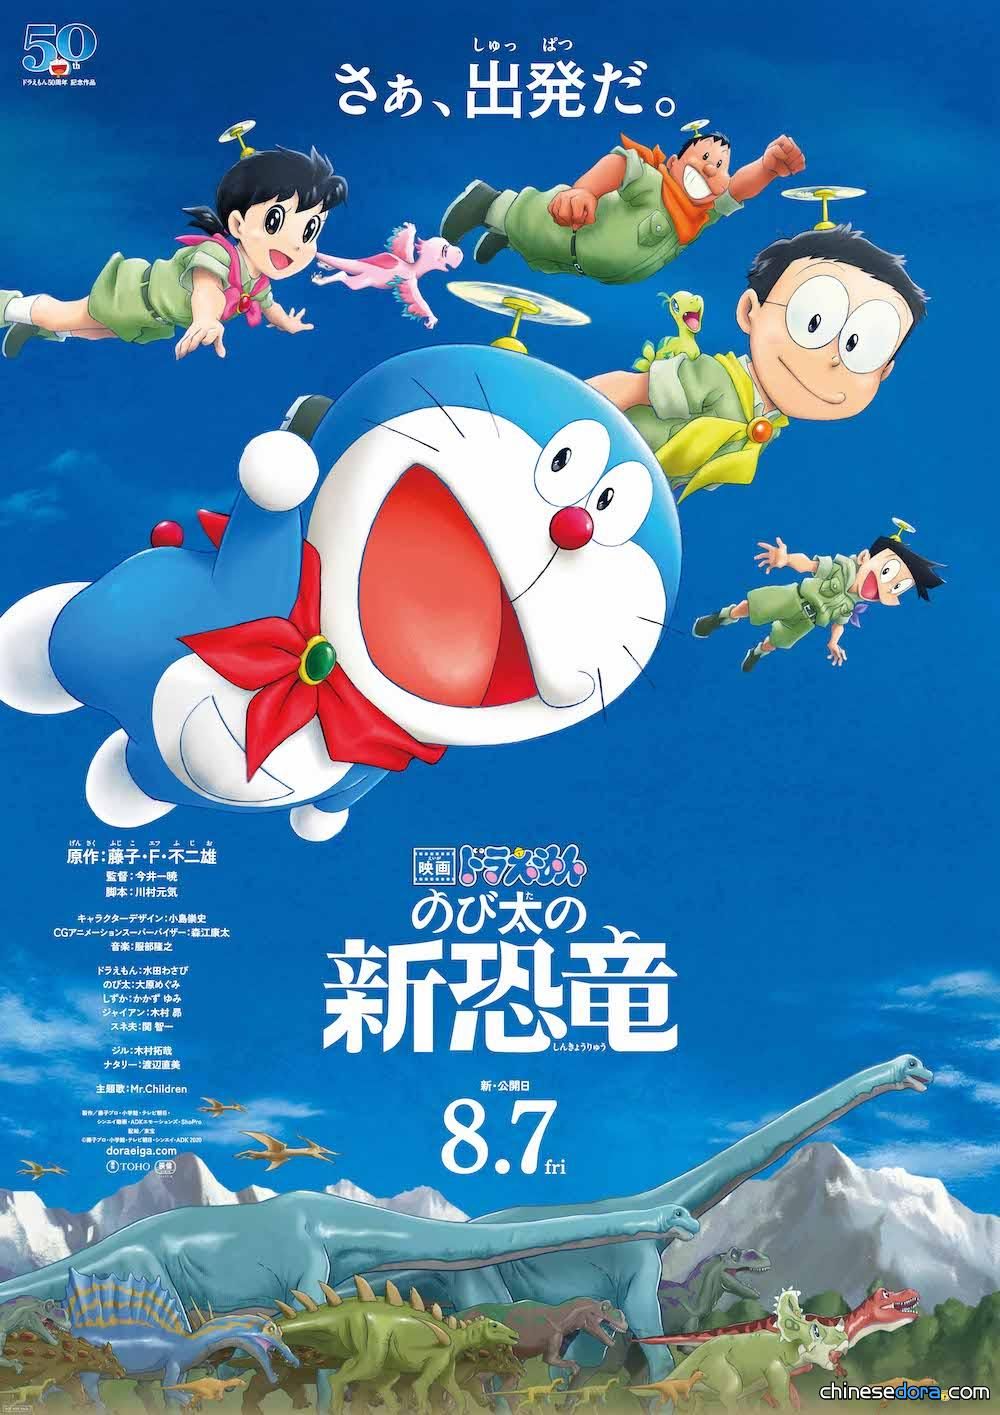 Doraemon 2021 Wallpapers - Wallpaper Cave